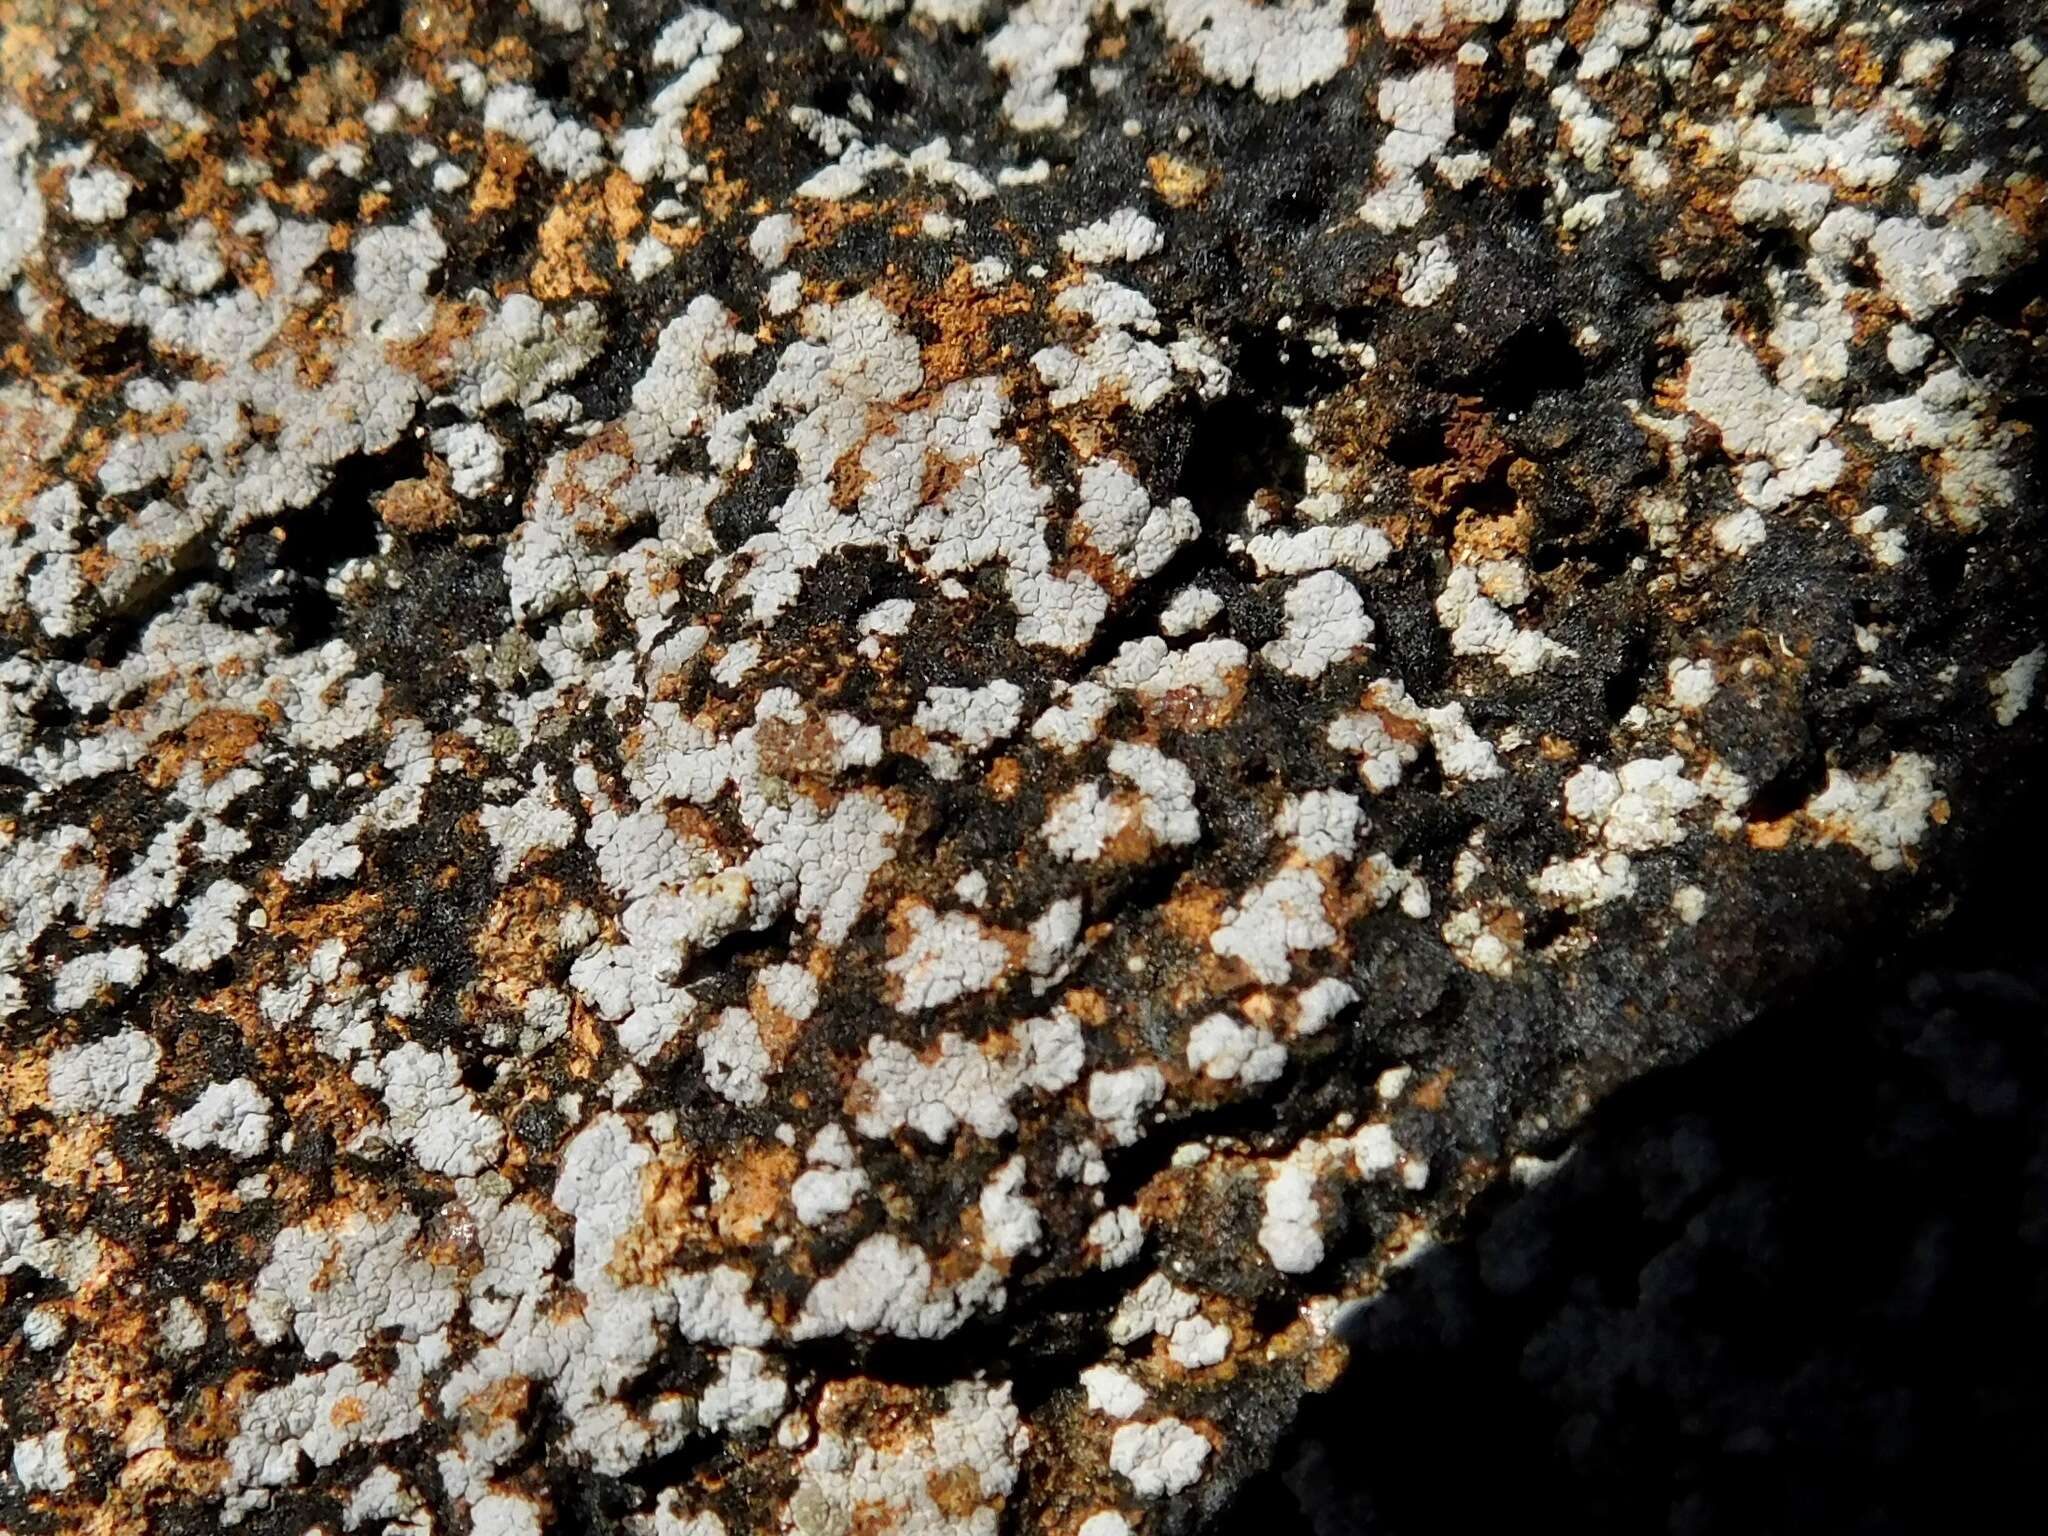 Image of rimmed lichen